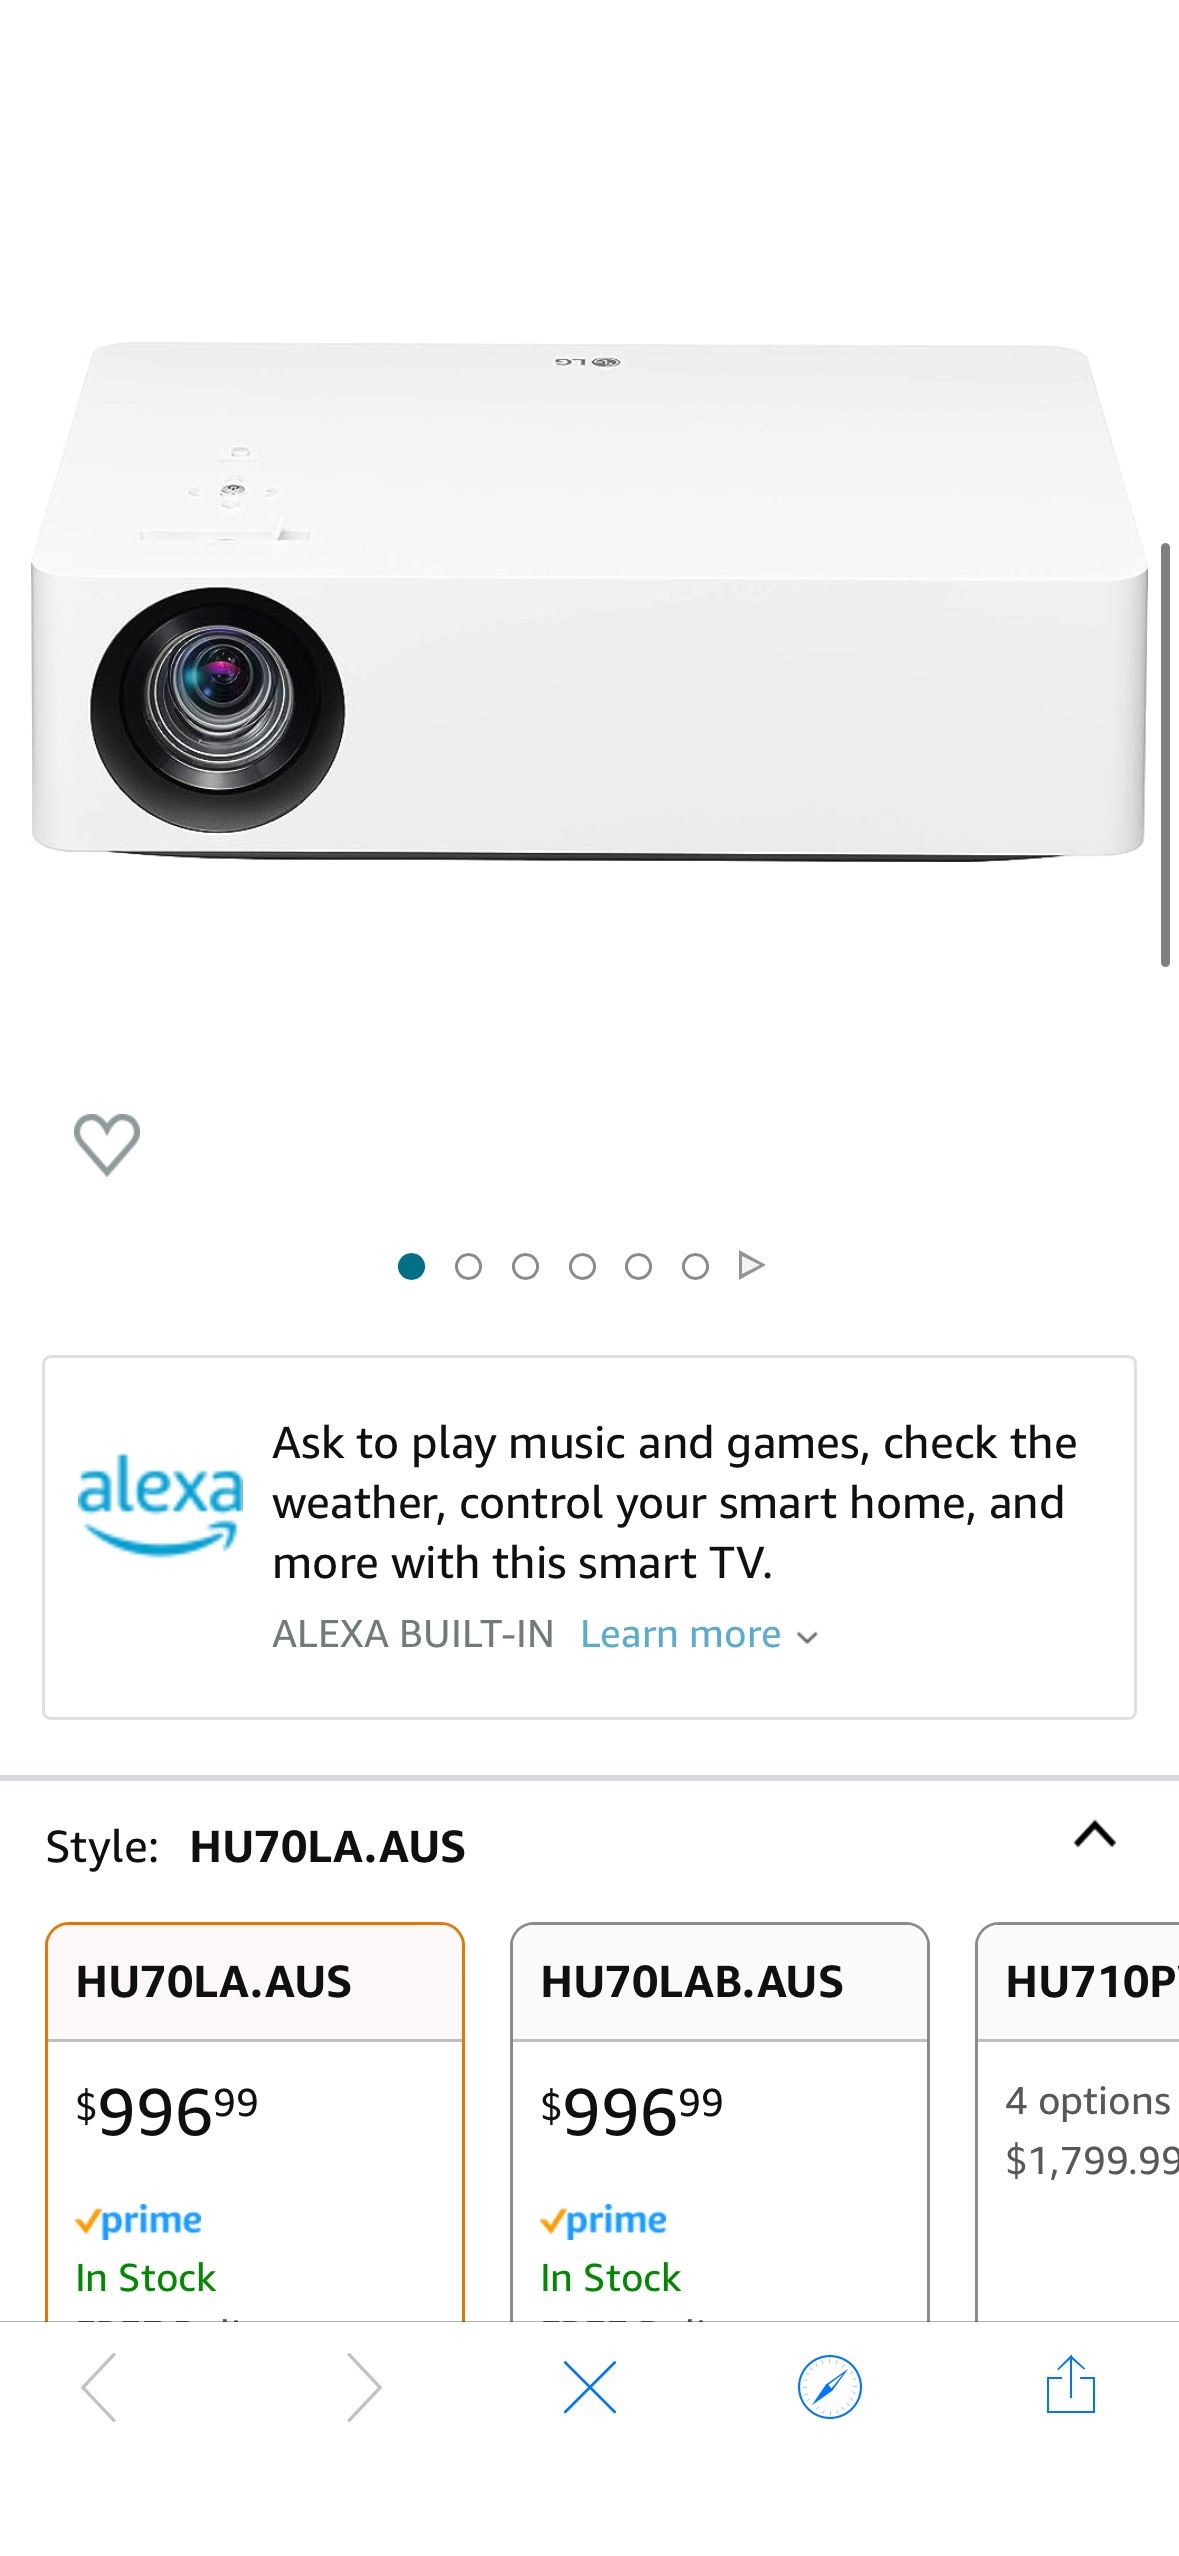 Amazon.com: LG CineBeam UHD 4K Projector HU70LA - DLP Home Theater Smart Projector with Alexa Built-In, White : Electronics